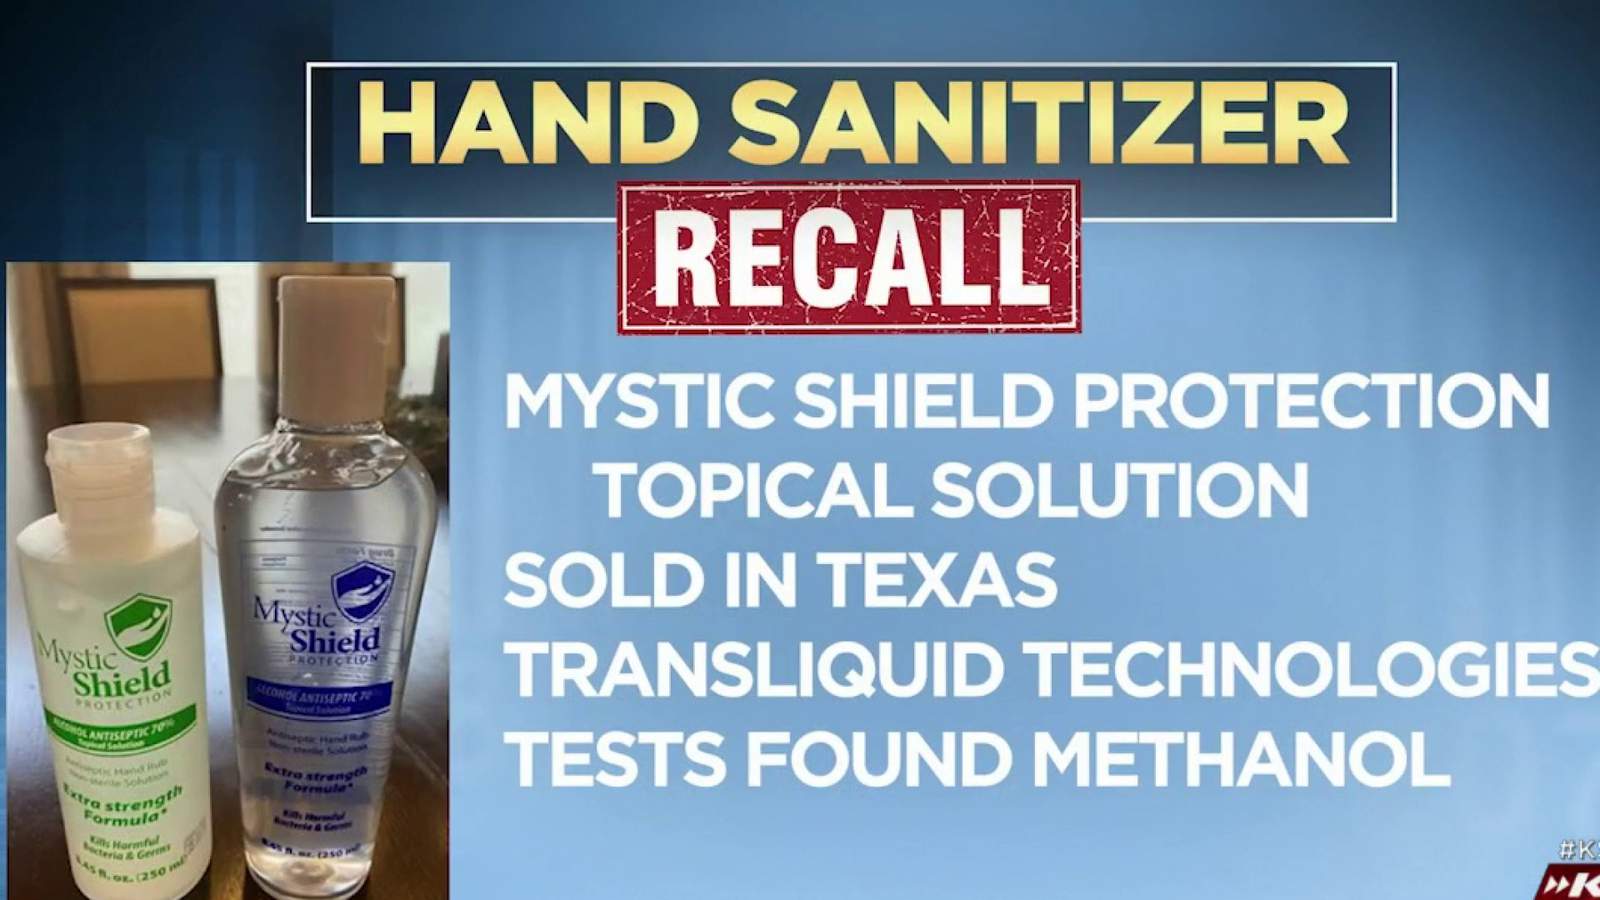 Two hand sanitizer brands recalled over methanol concerns